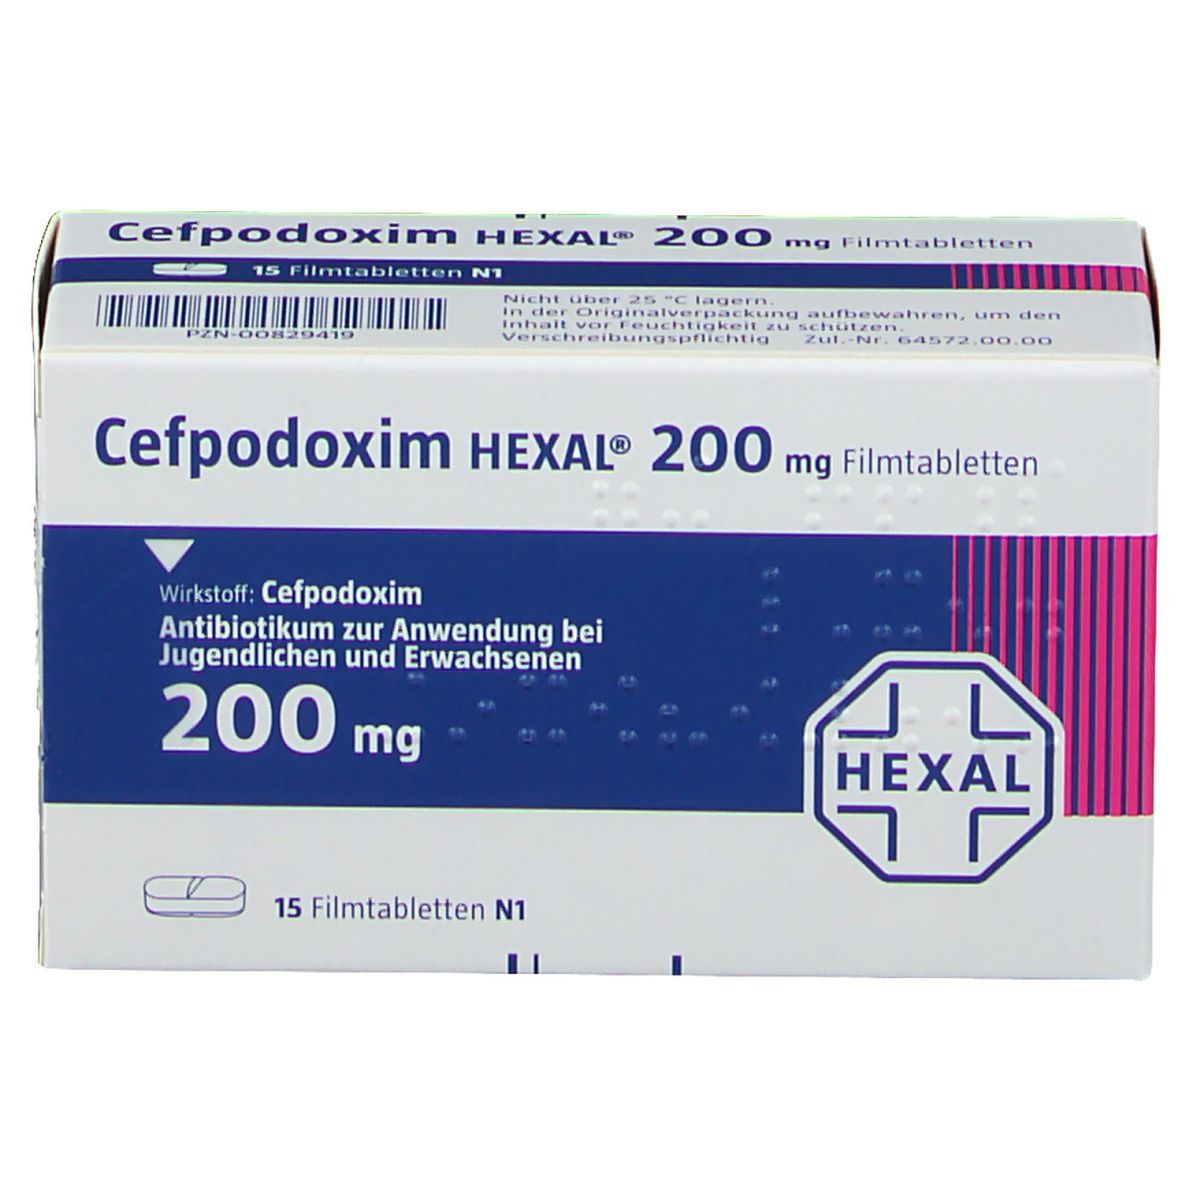 Cefpodoxim HEXAL® 200 mg